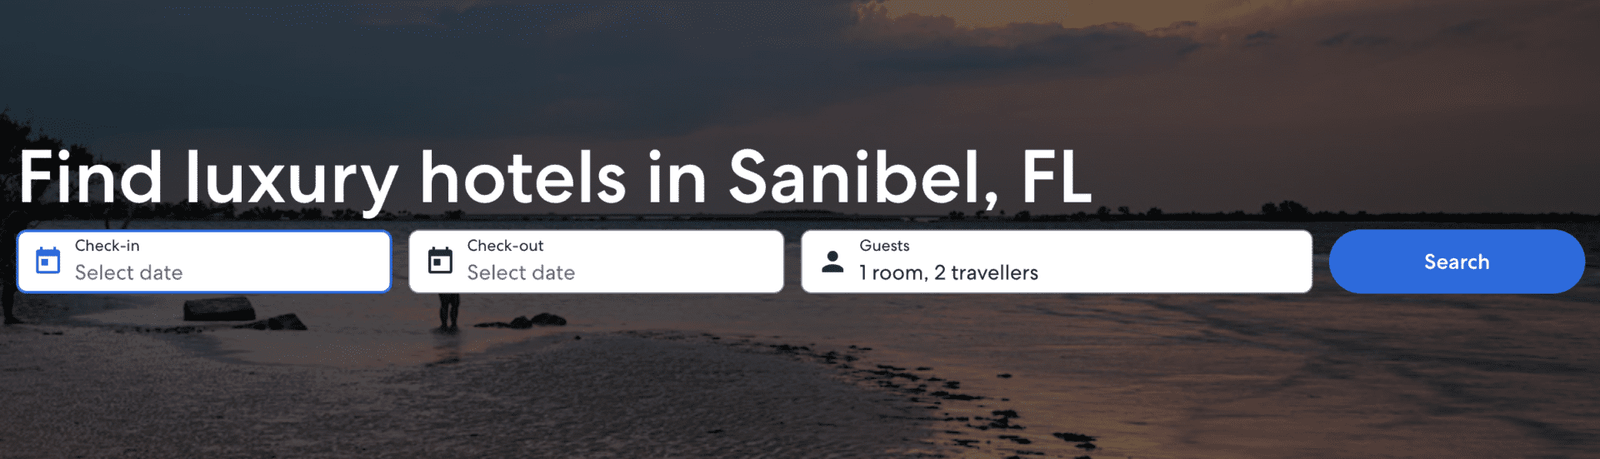 sanibel luxury resorts